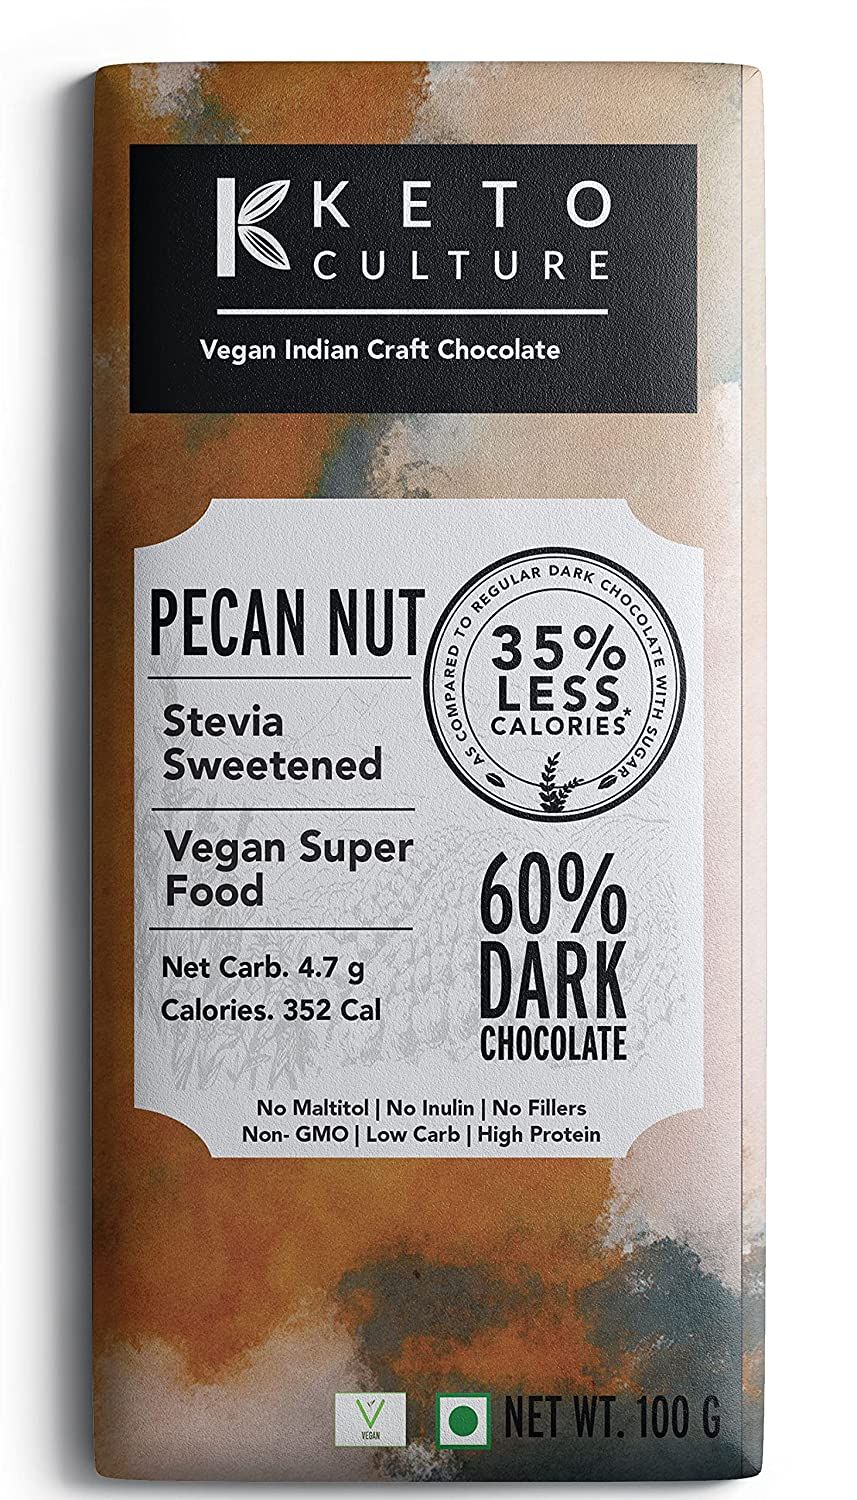 Keto Culture Pecan Nut Vegan Dark Chocolate Image